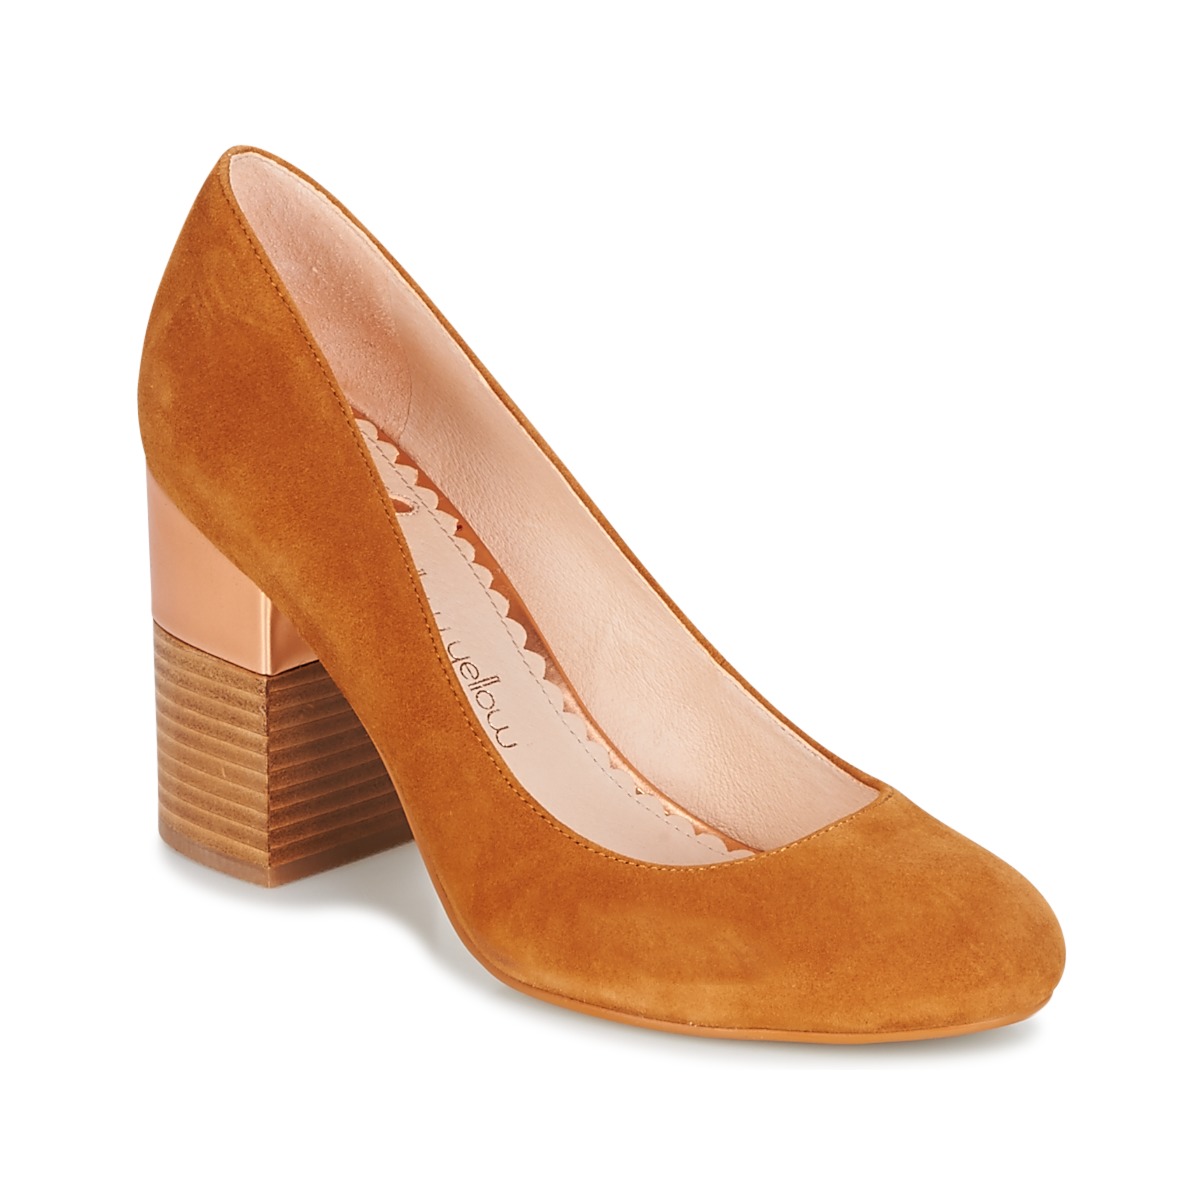 Chaussures Femme Rideaux / stores DABOL CAMEL